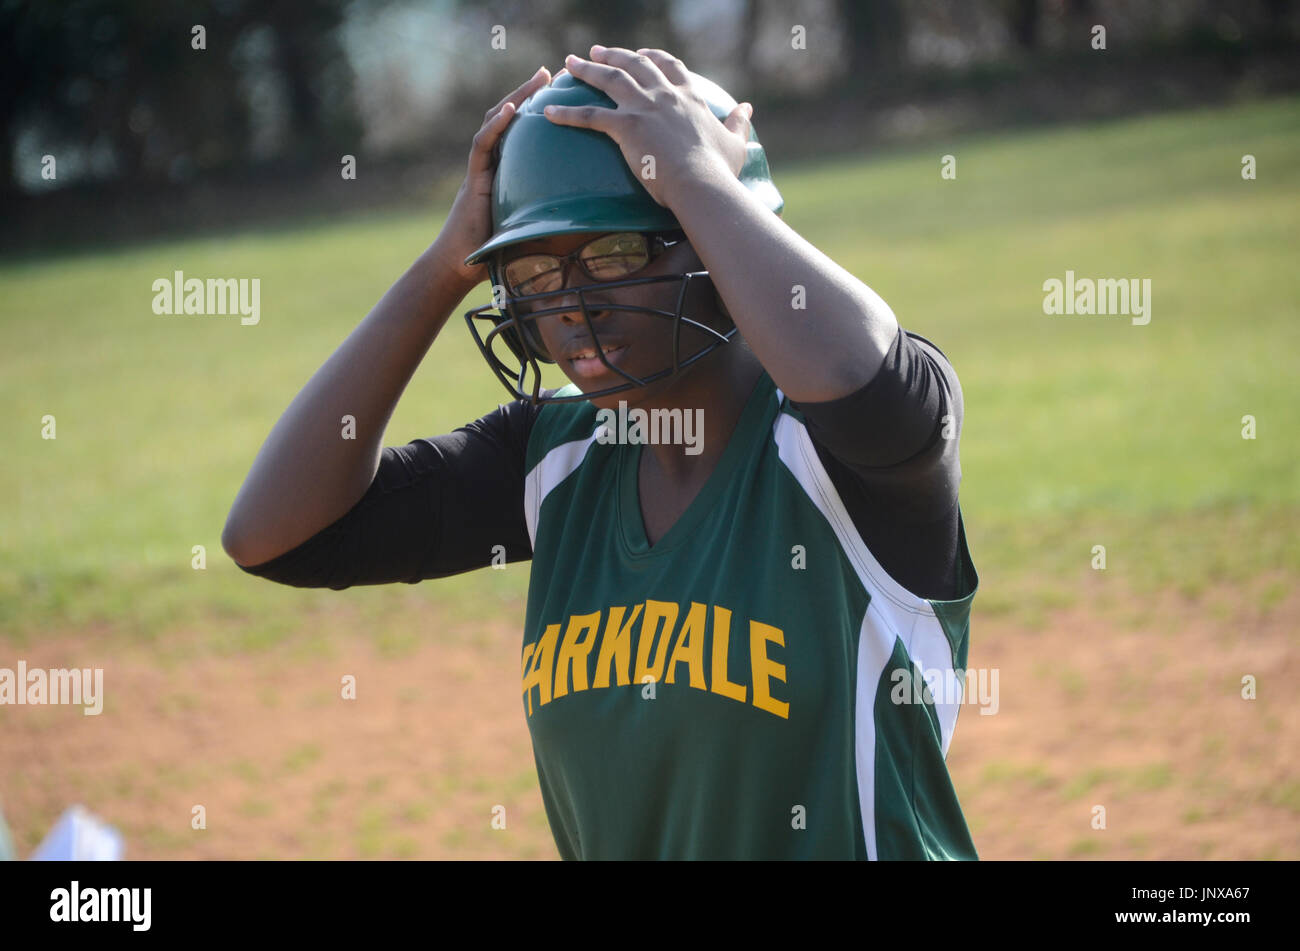 a softballplayer adjust her batting helmet during a high school softball game Stock Photo